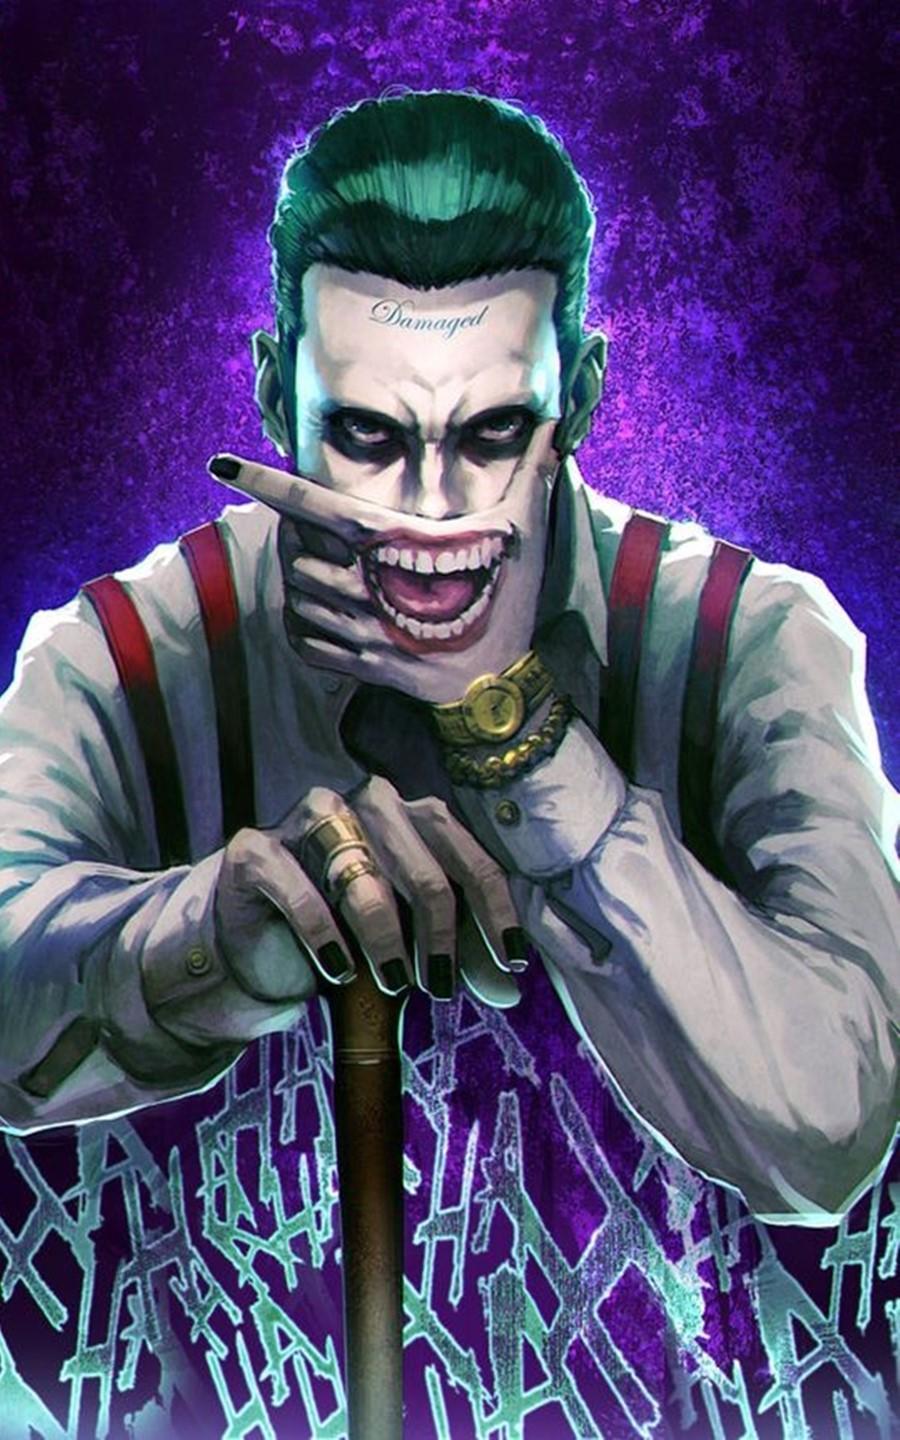 Joker download the new for windows